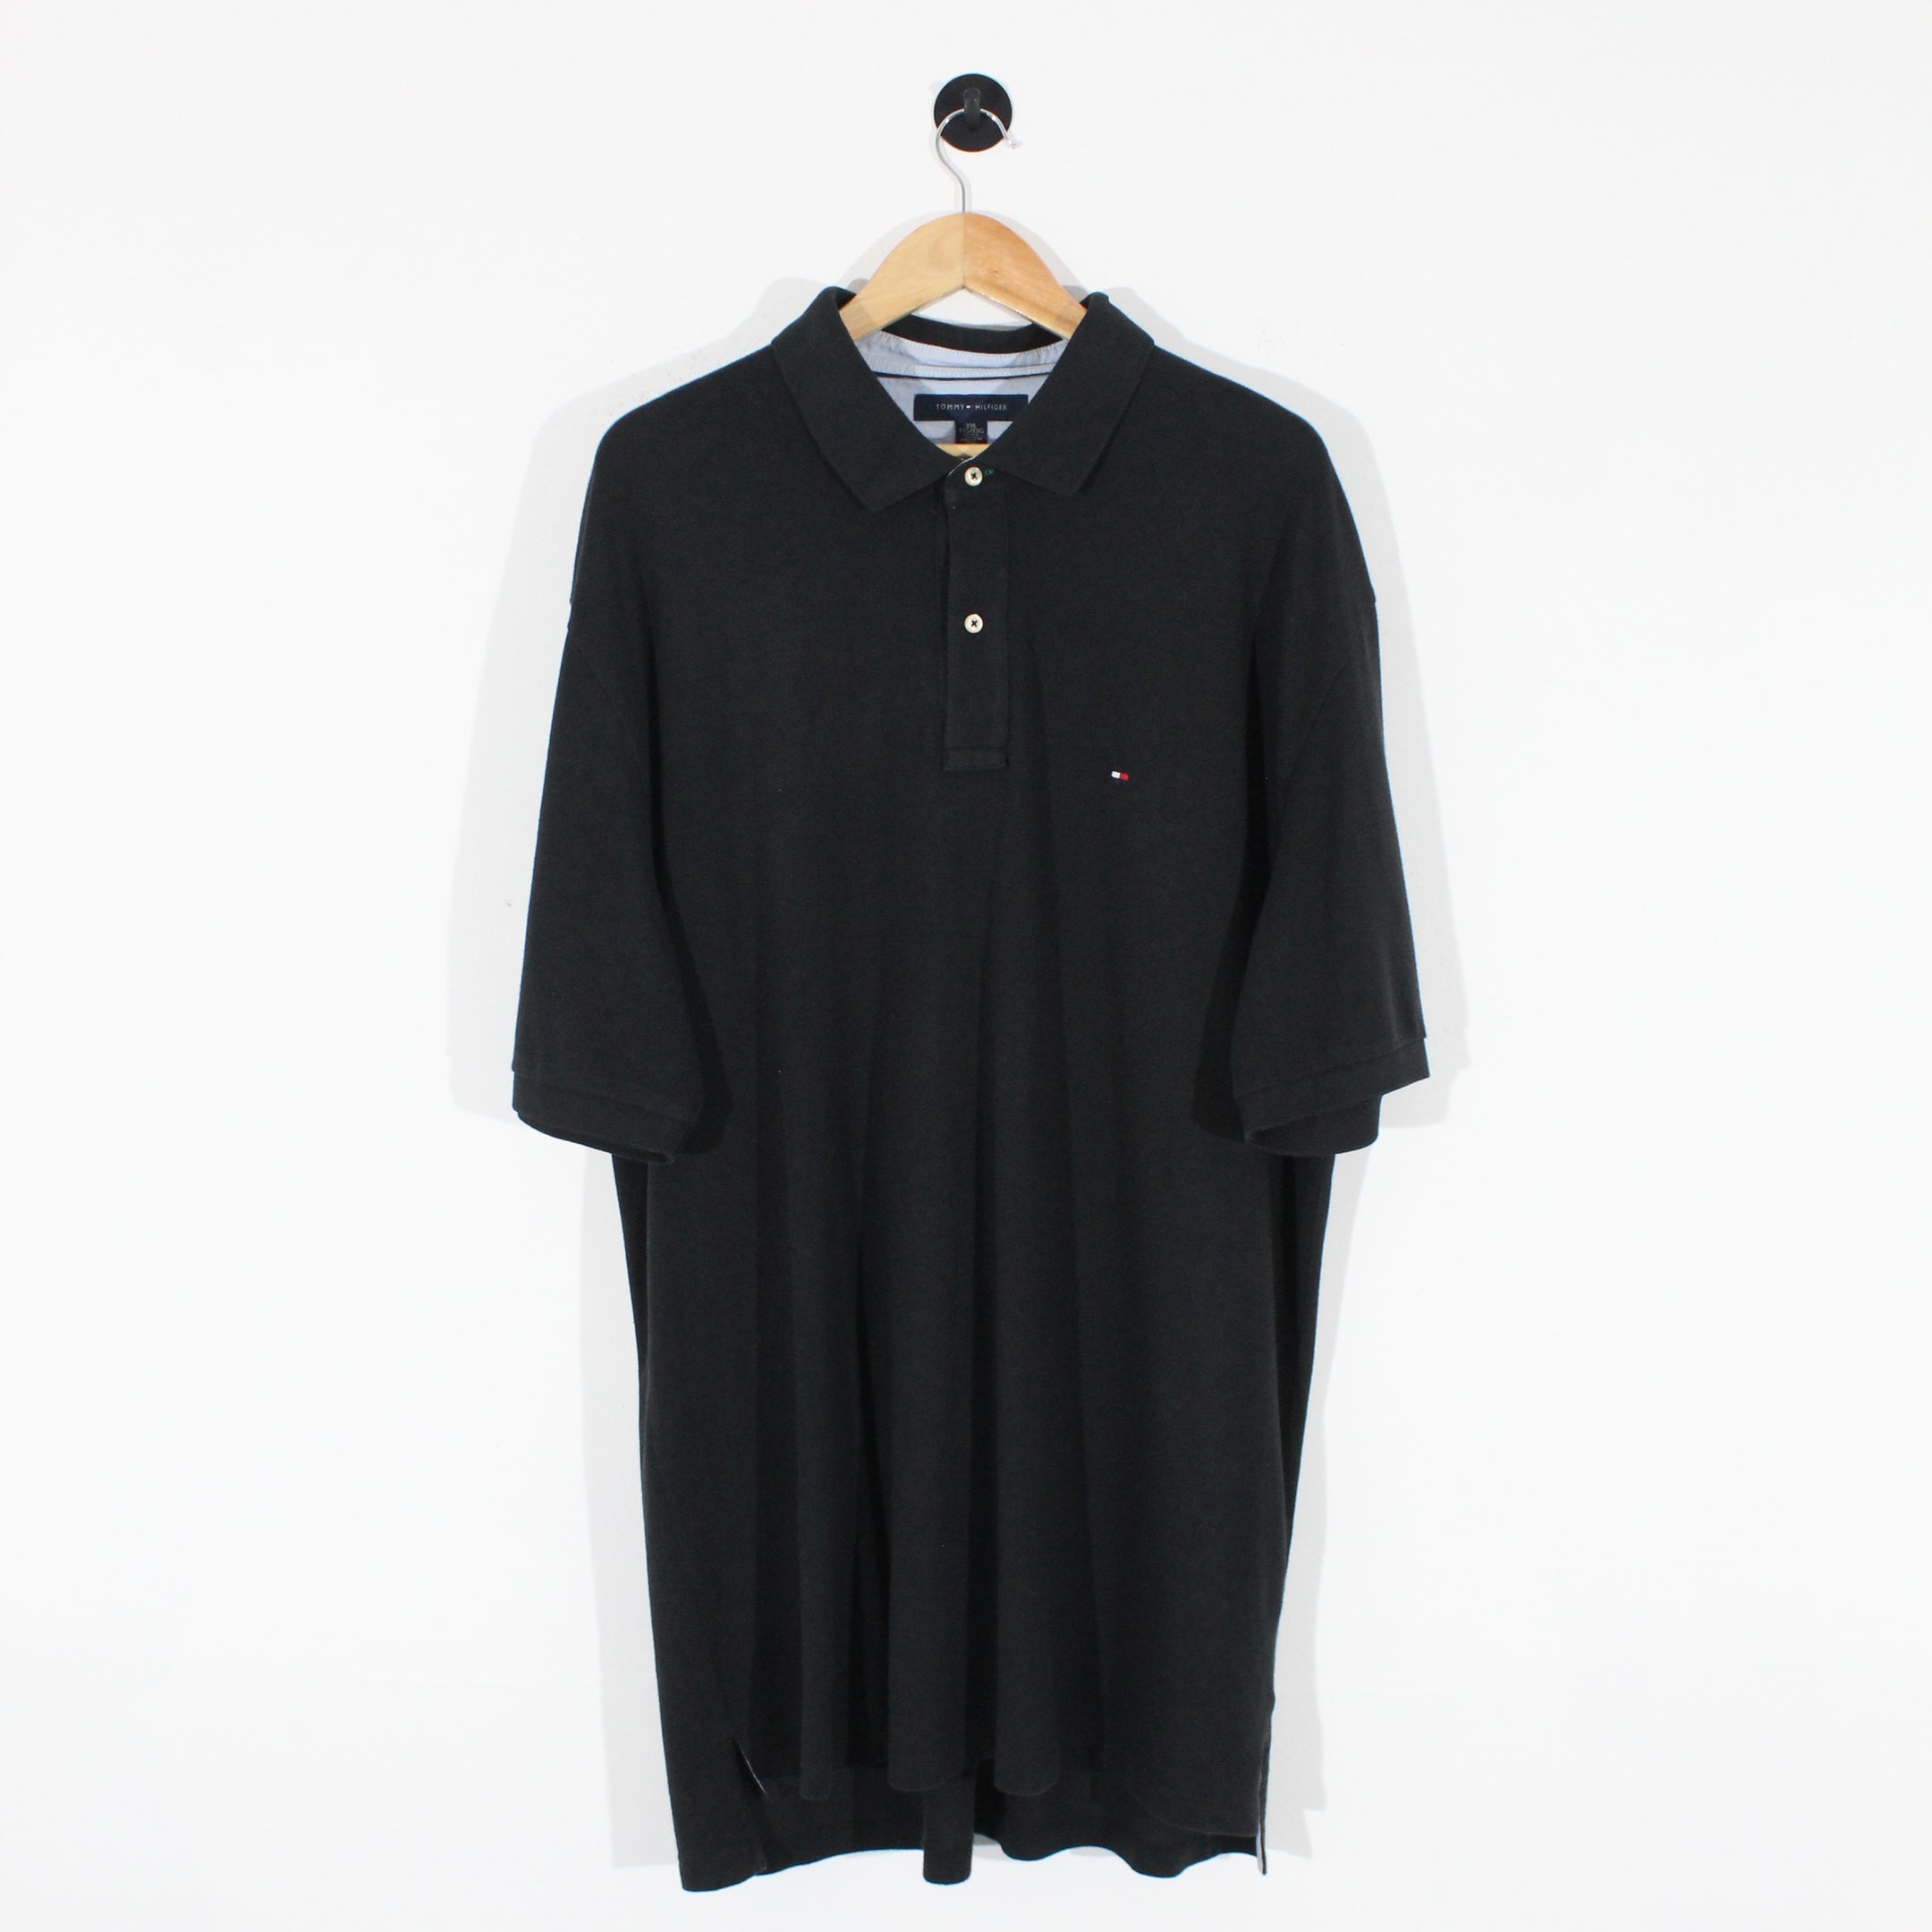 Black Tommy Hilfiger Polo Shirt (2XL)